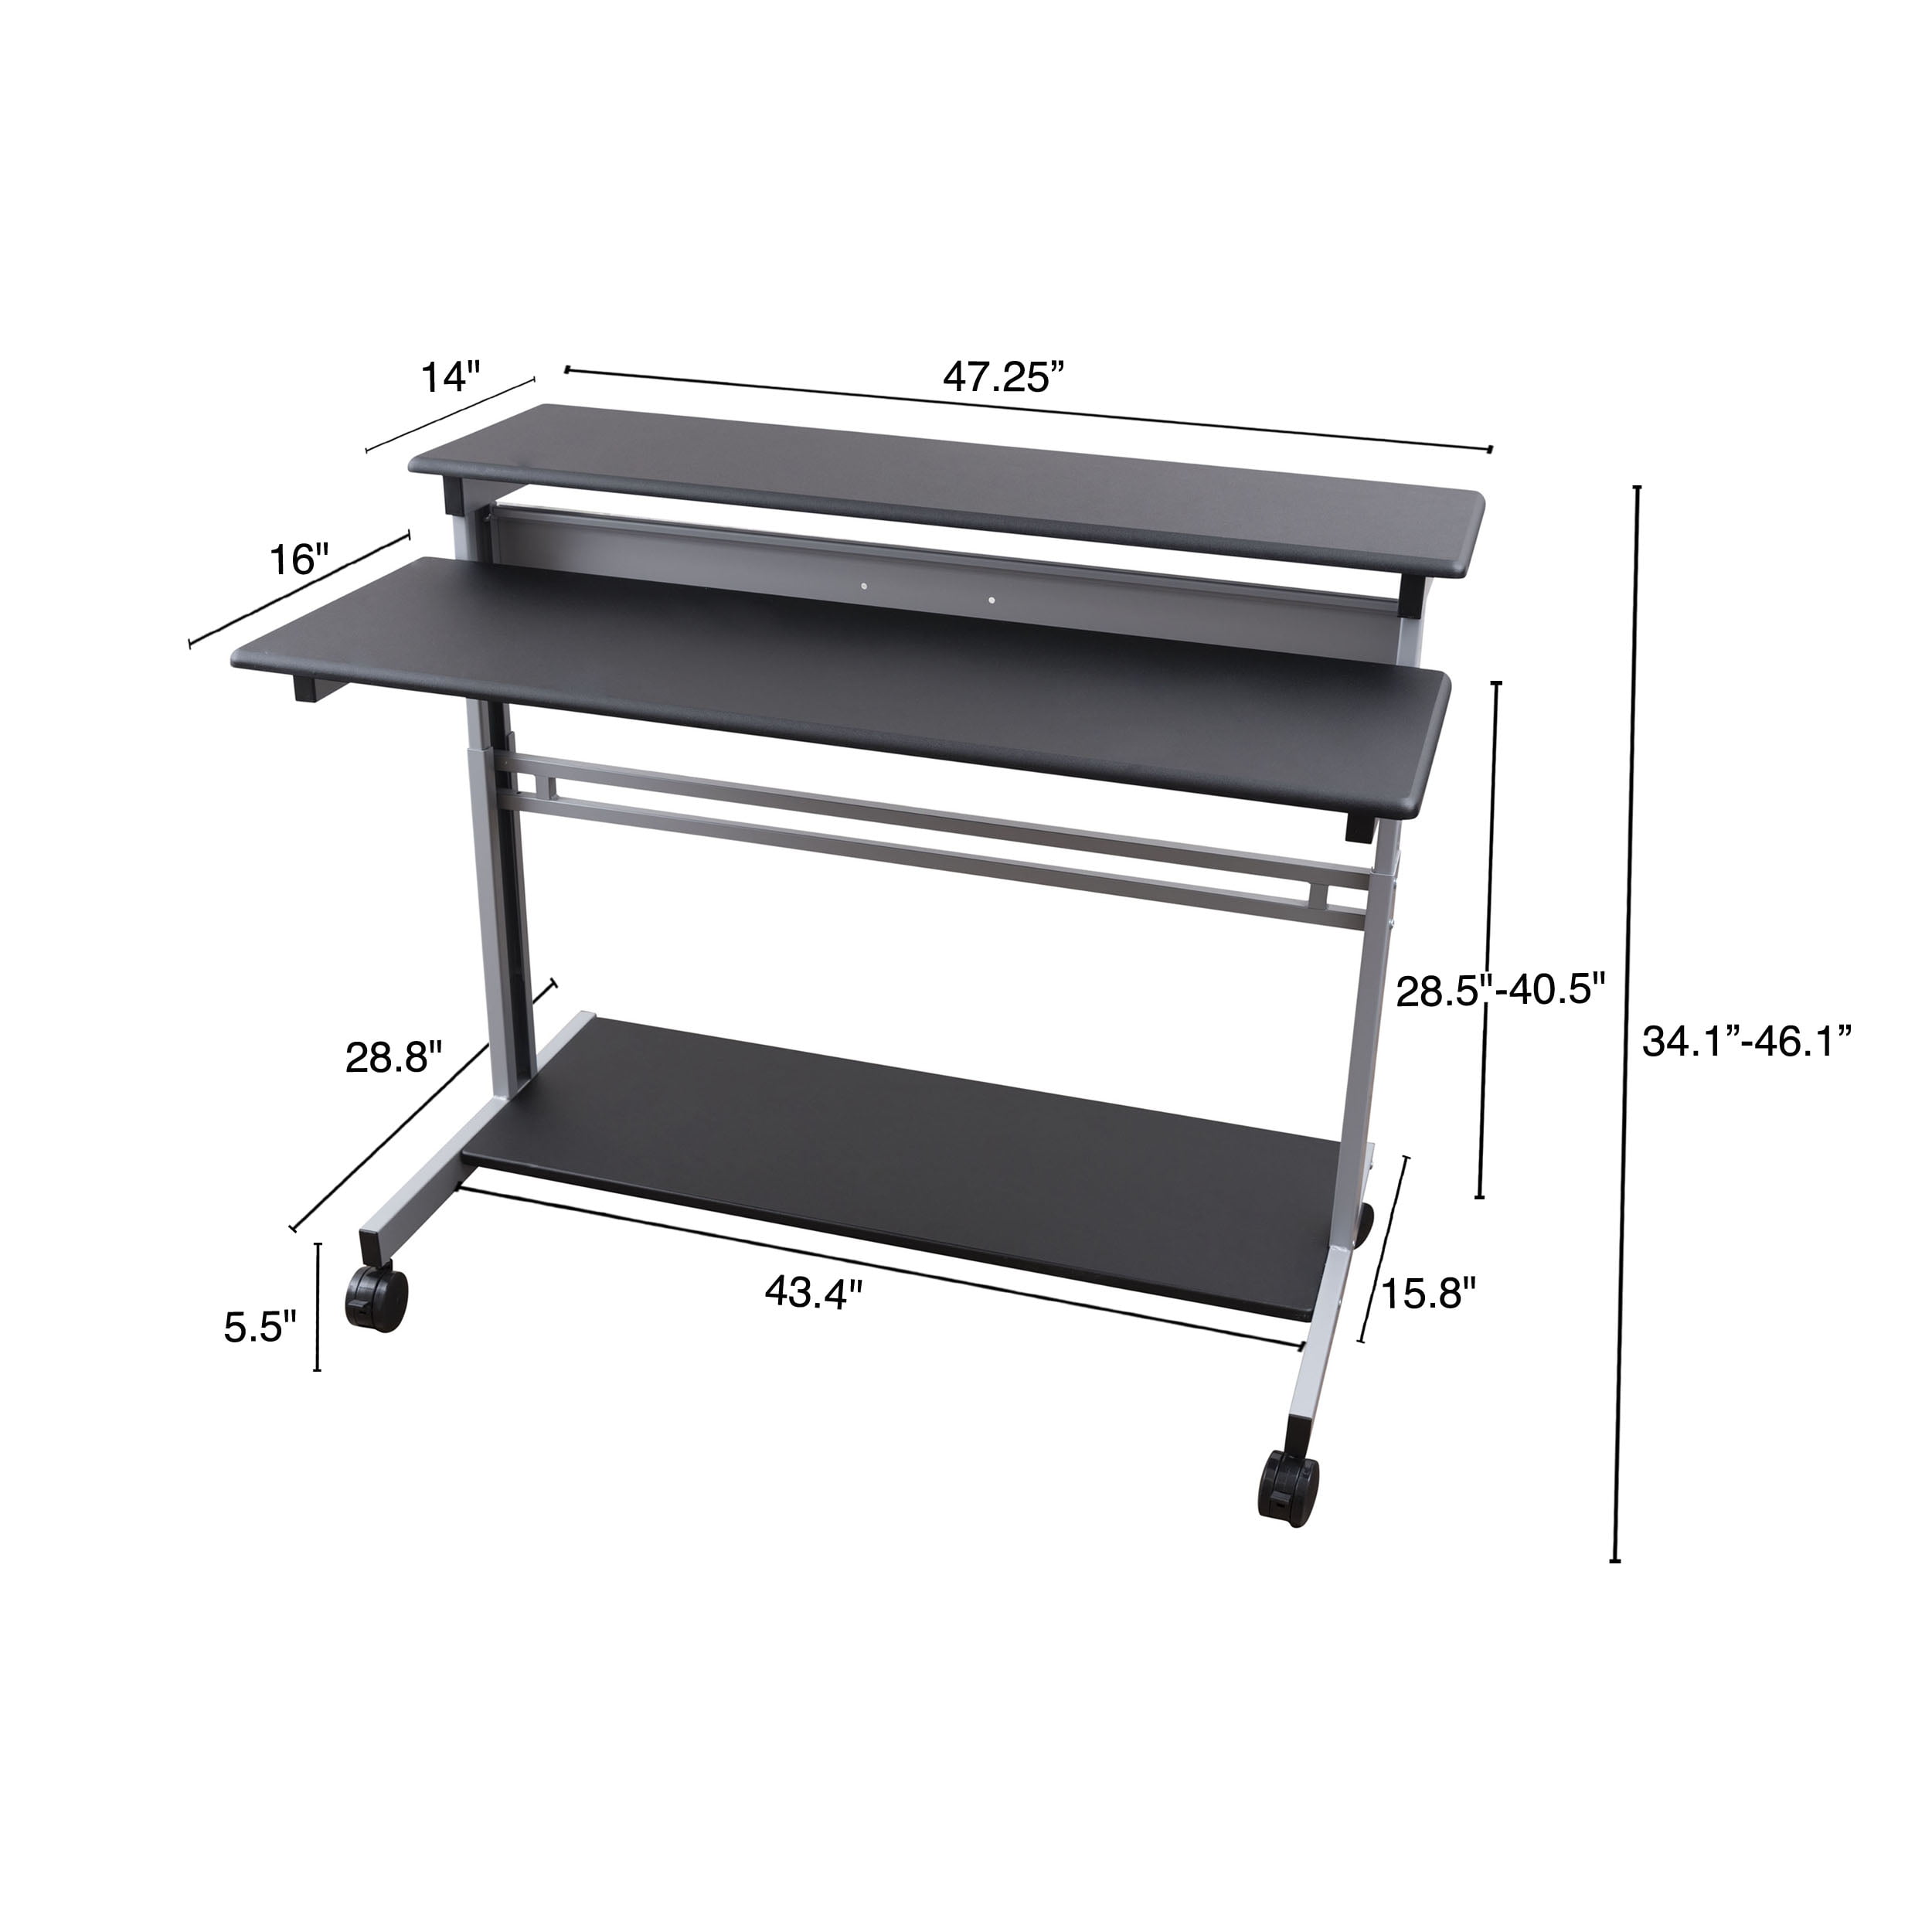 Stand Up Desk Store Rolling Adjustable Height Two Tier Standing Desk Computer Workstation (Silver Frame/Black Top, 48